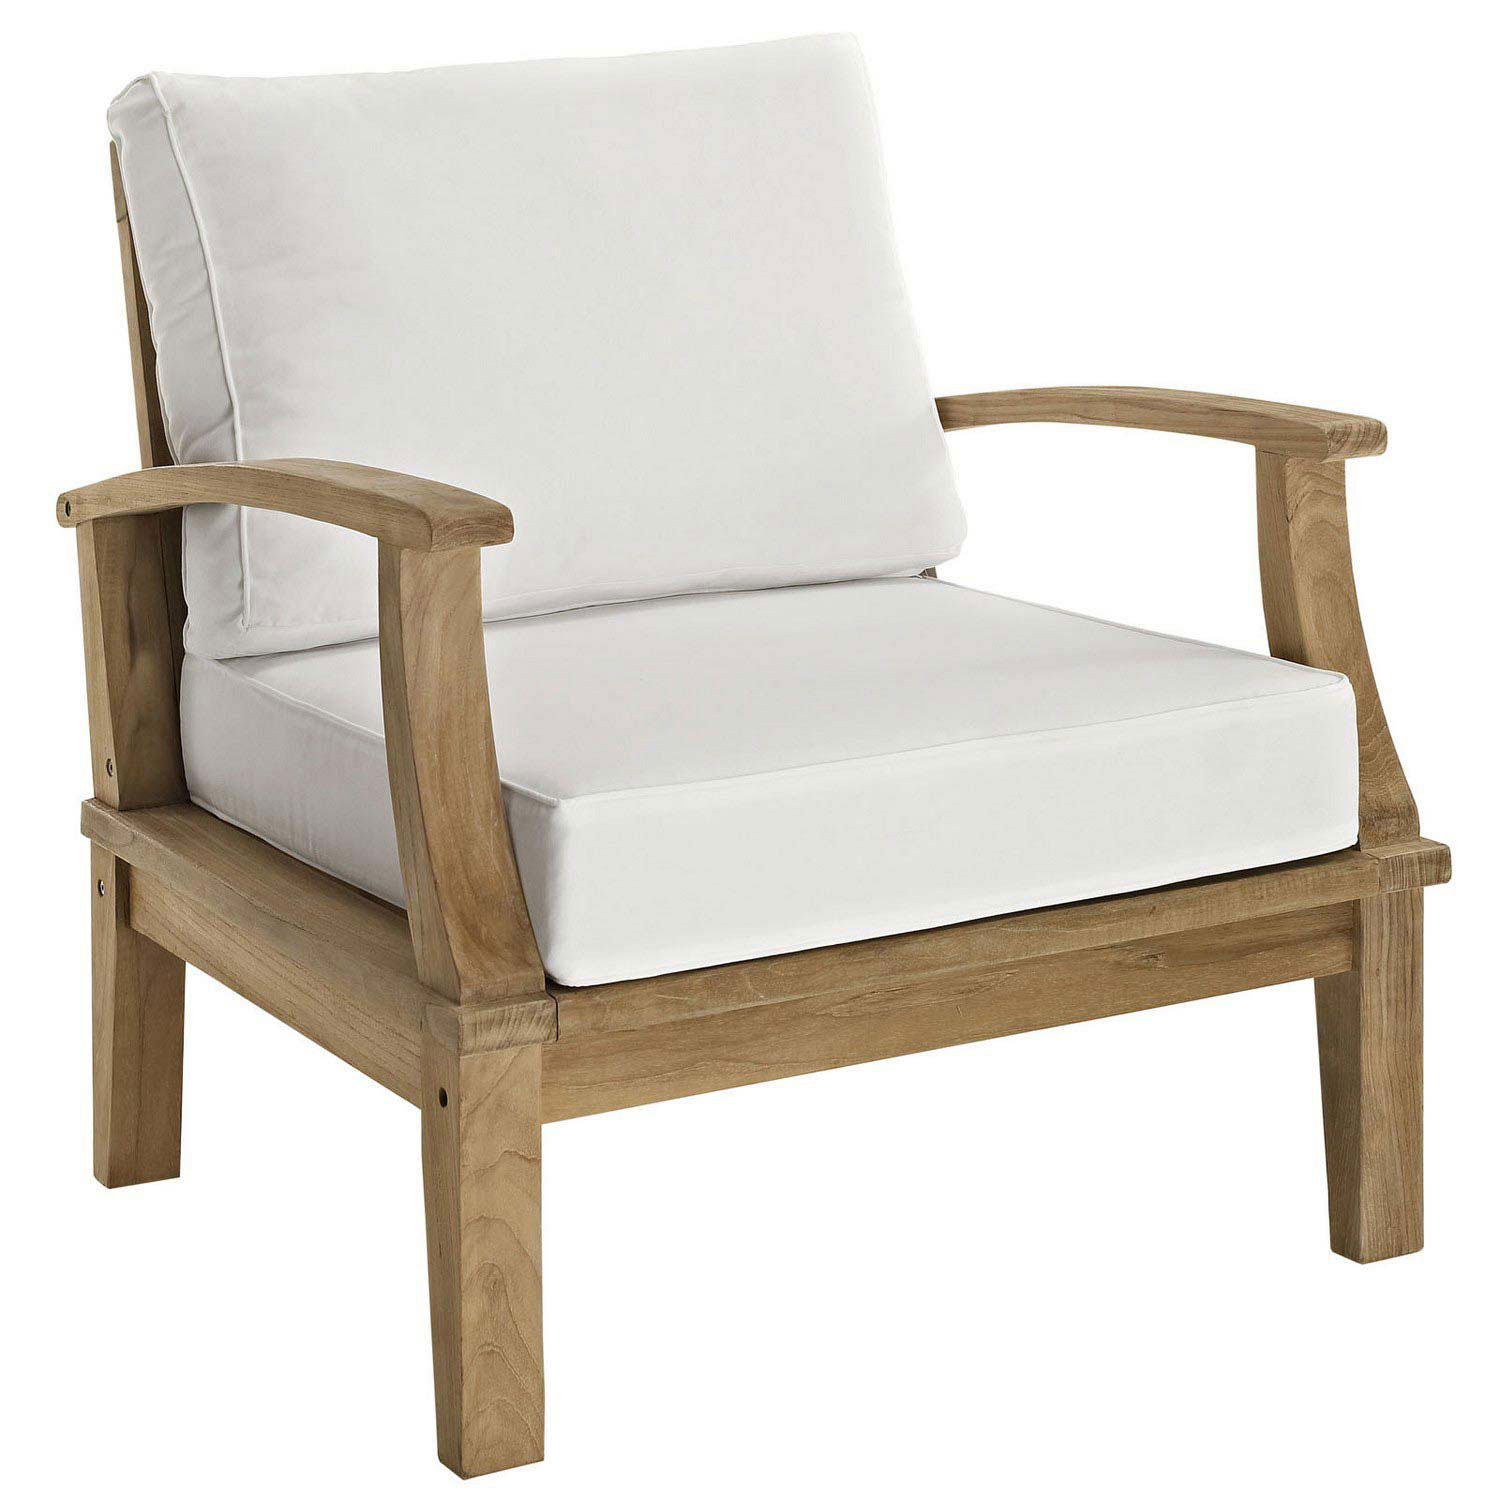 Modway Marina 7 Piece Outdoor Patio Teak Sofa Set - Natural White